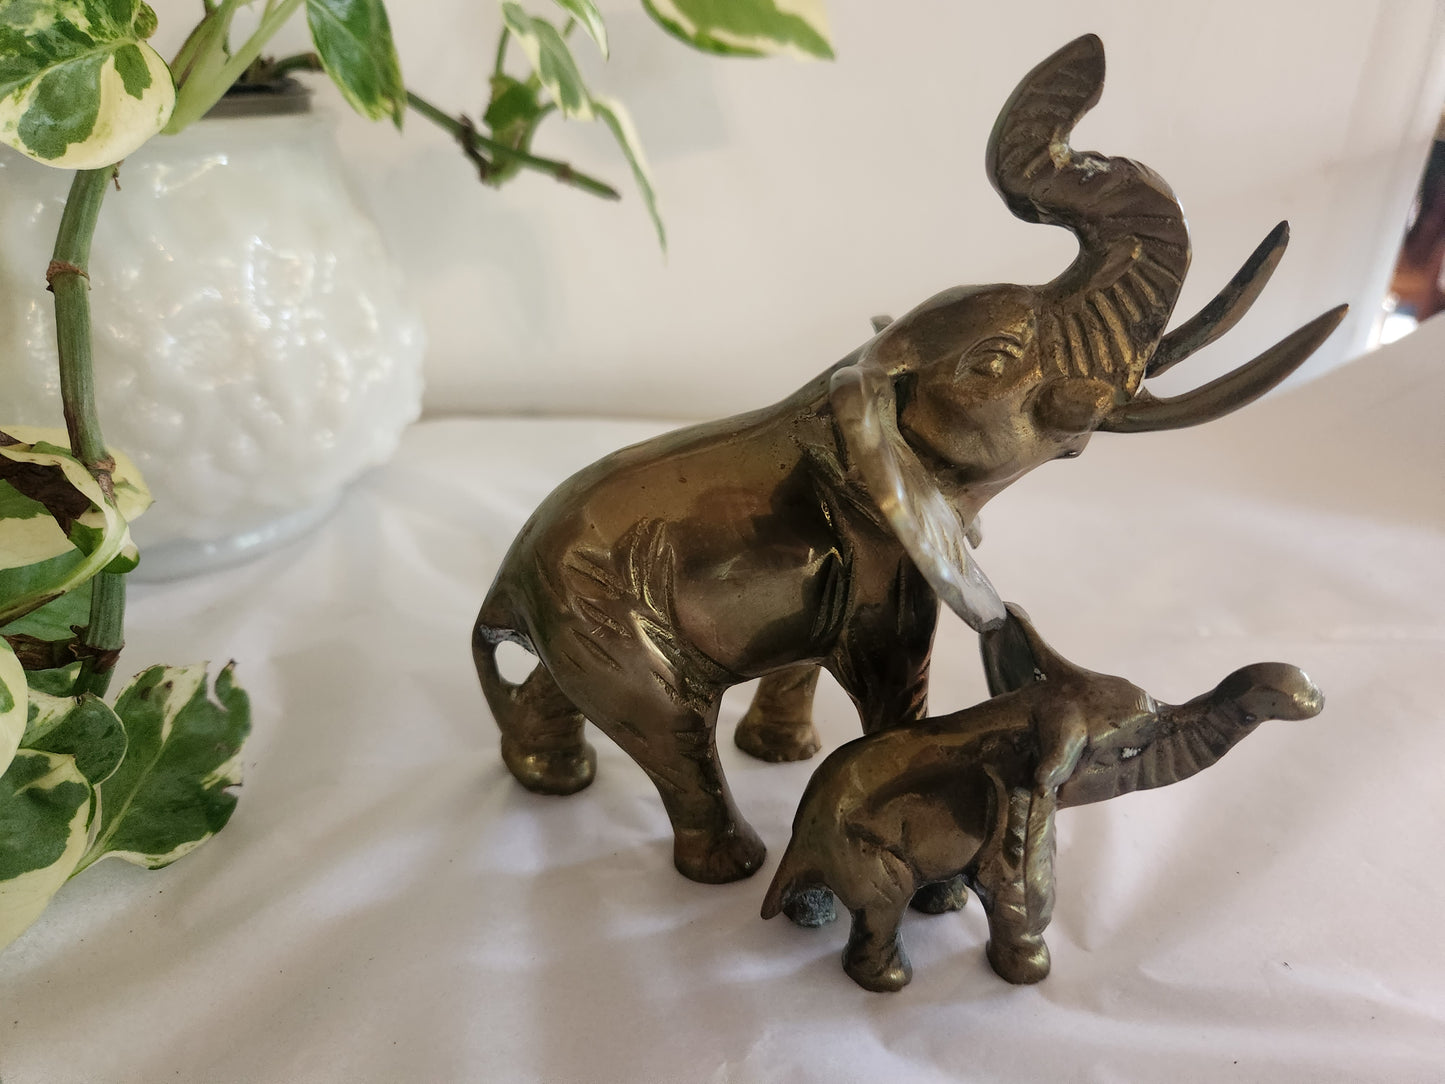 Mom & Baby Elephant Statue